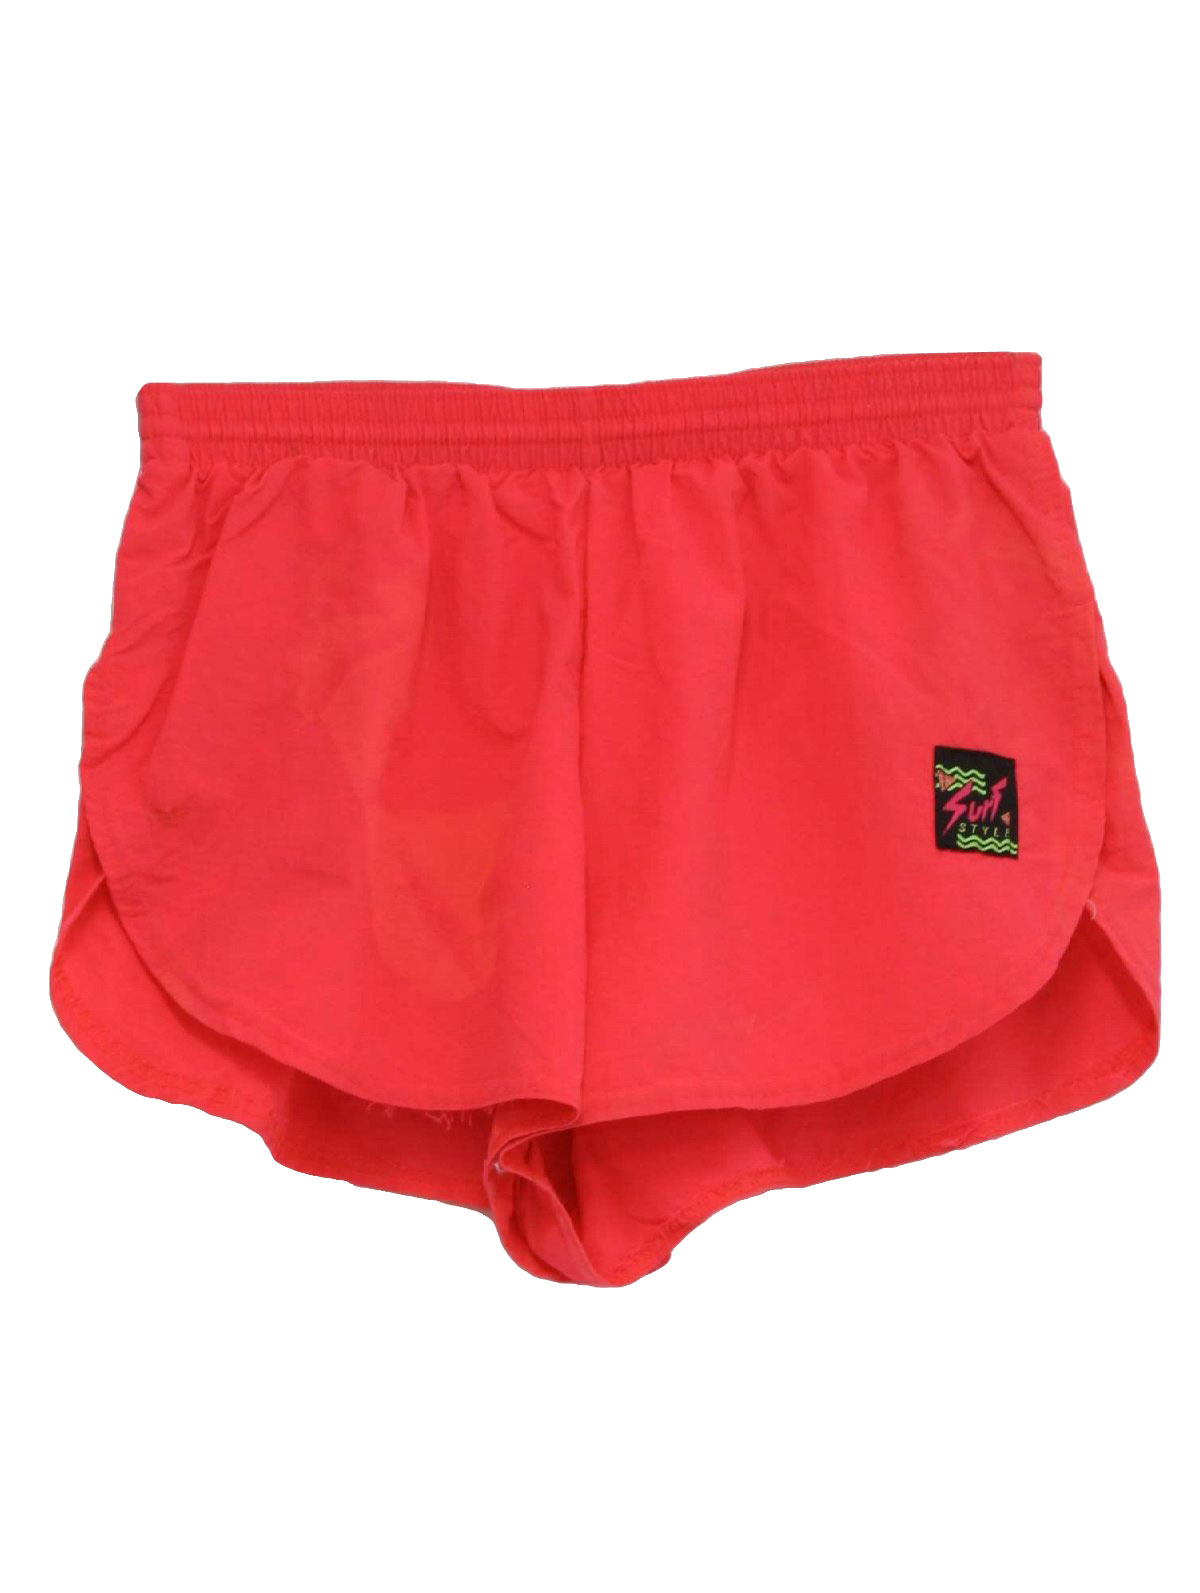 Retro Nineties Shorts: 90s -Surf Line- Mens hot pink nylon, brief lined ...